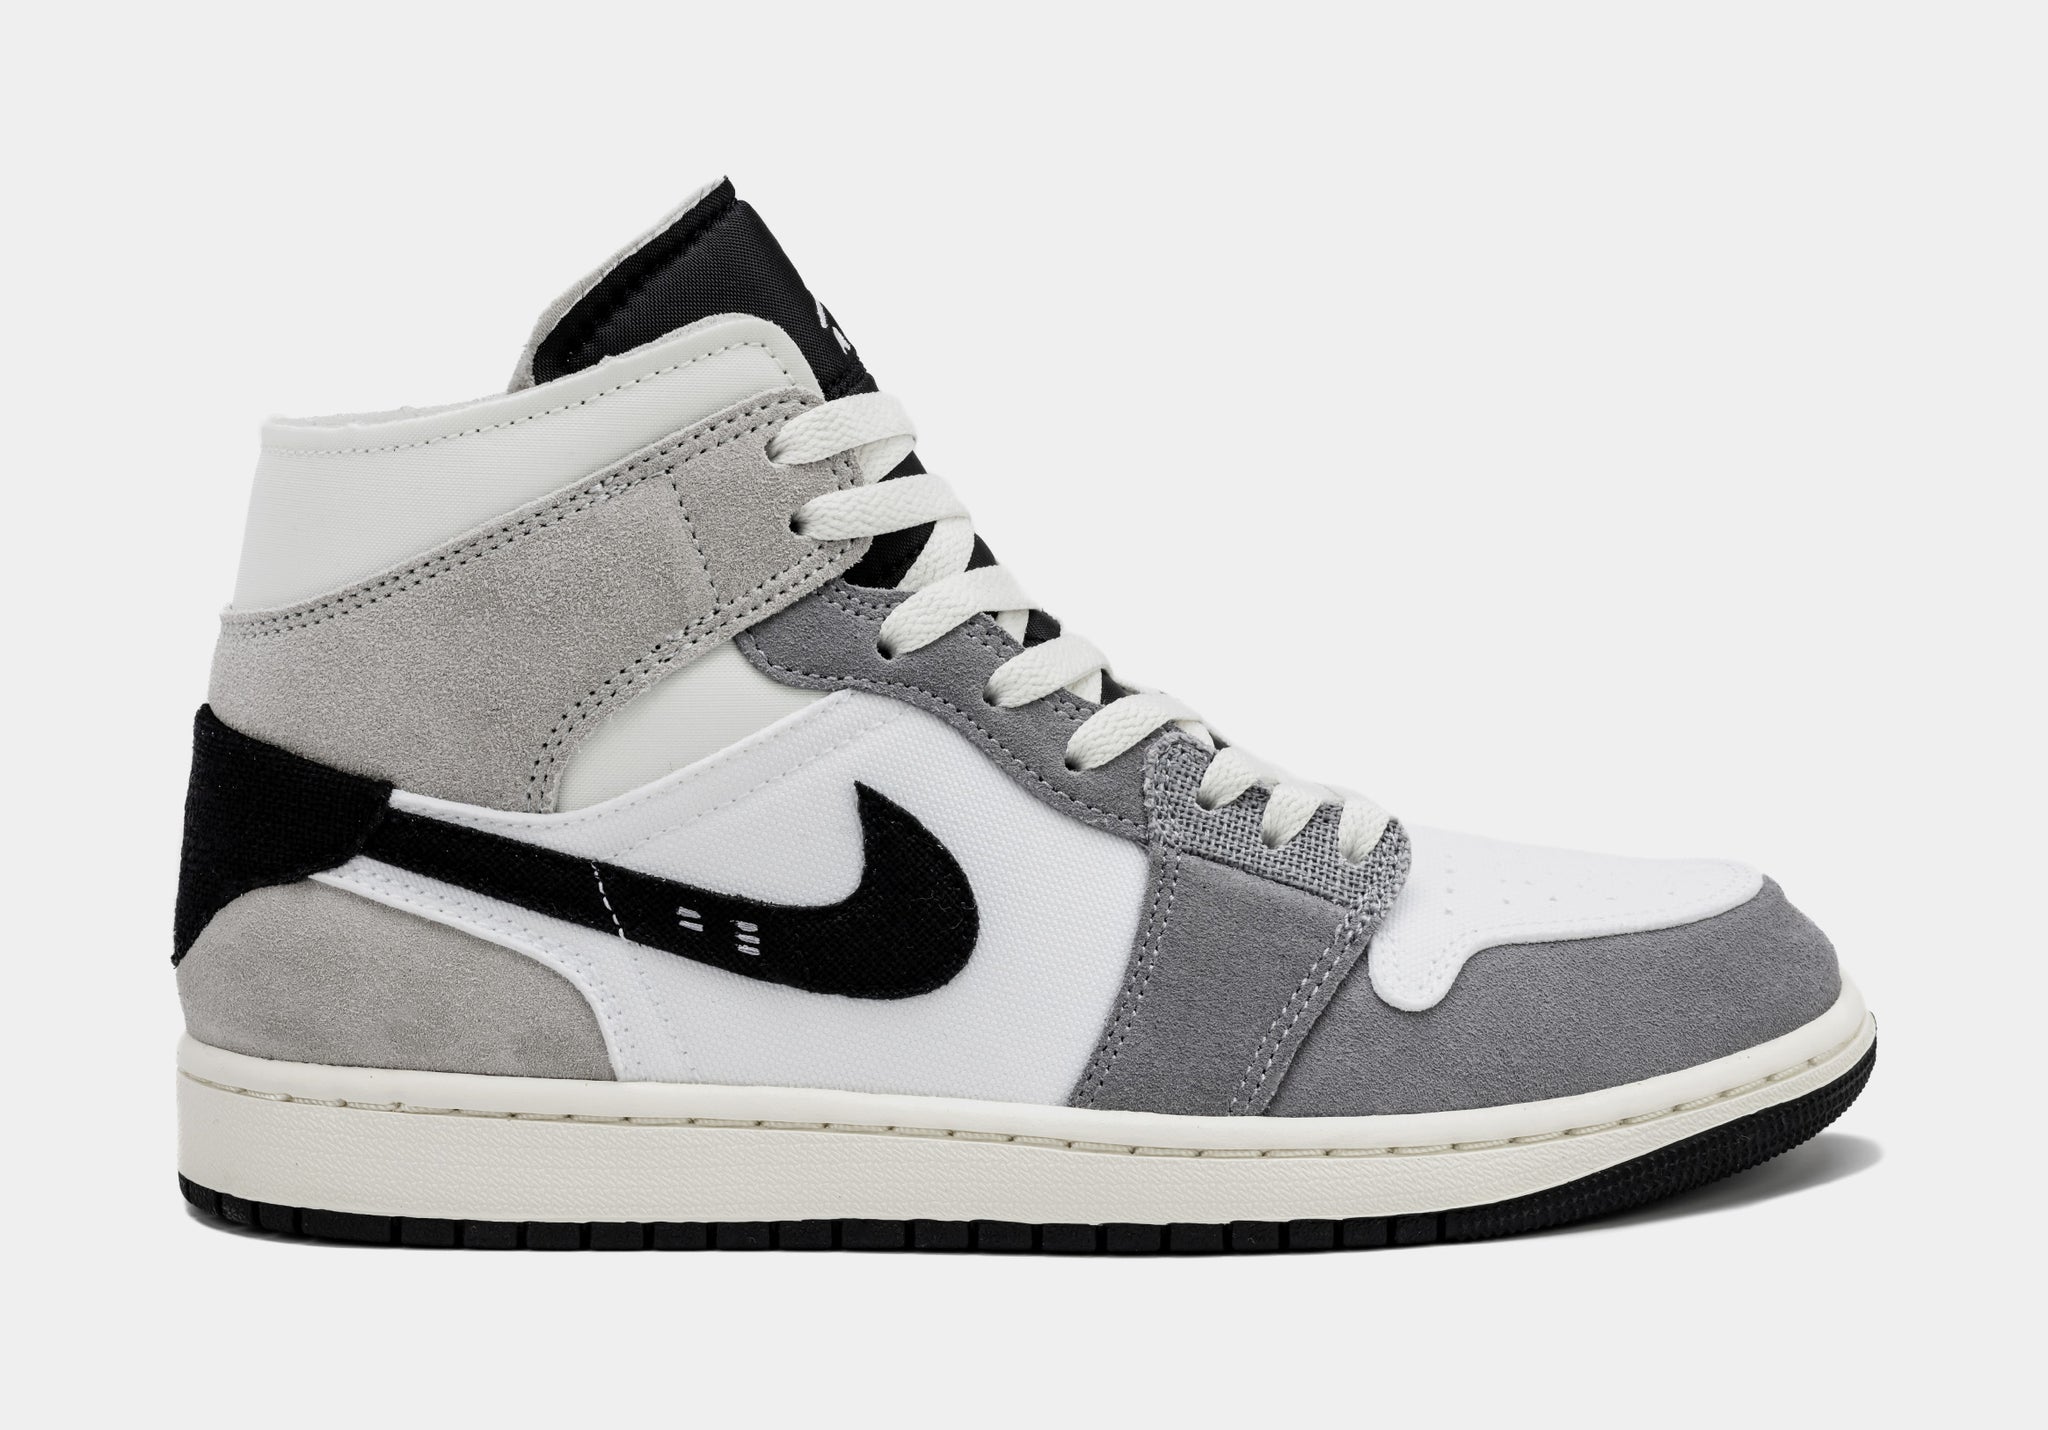 Air Jordan 1 Retro Mid Craft Cement Grey Mens Lifestyle Shoes (Black/White)